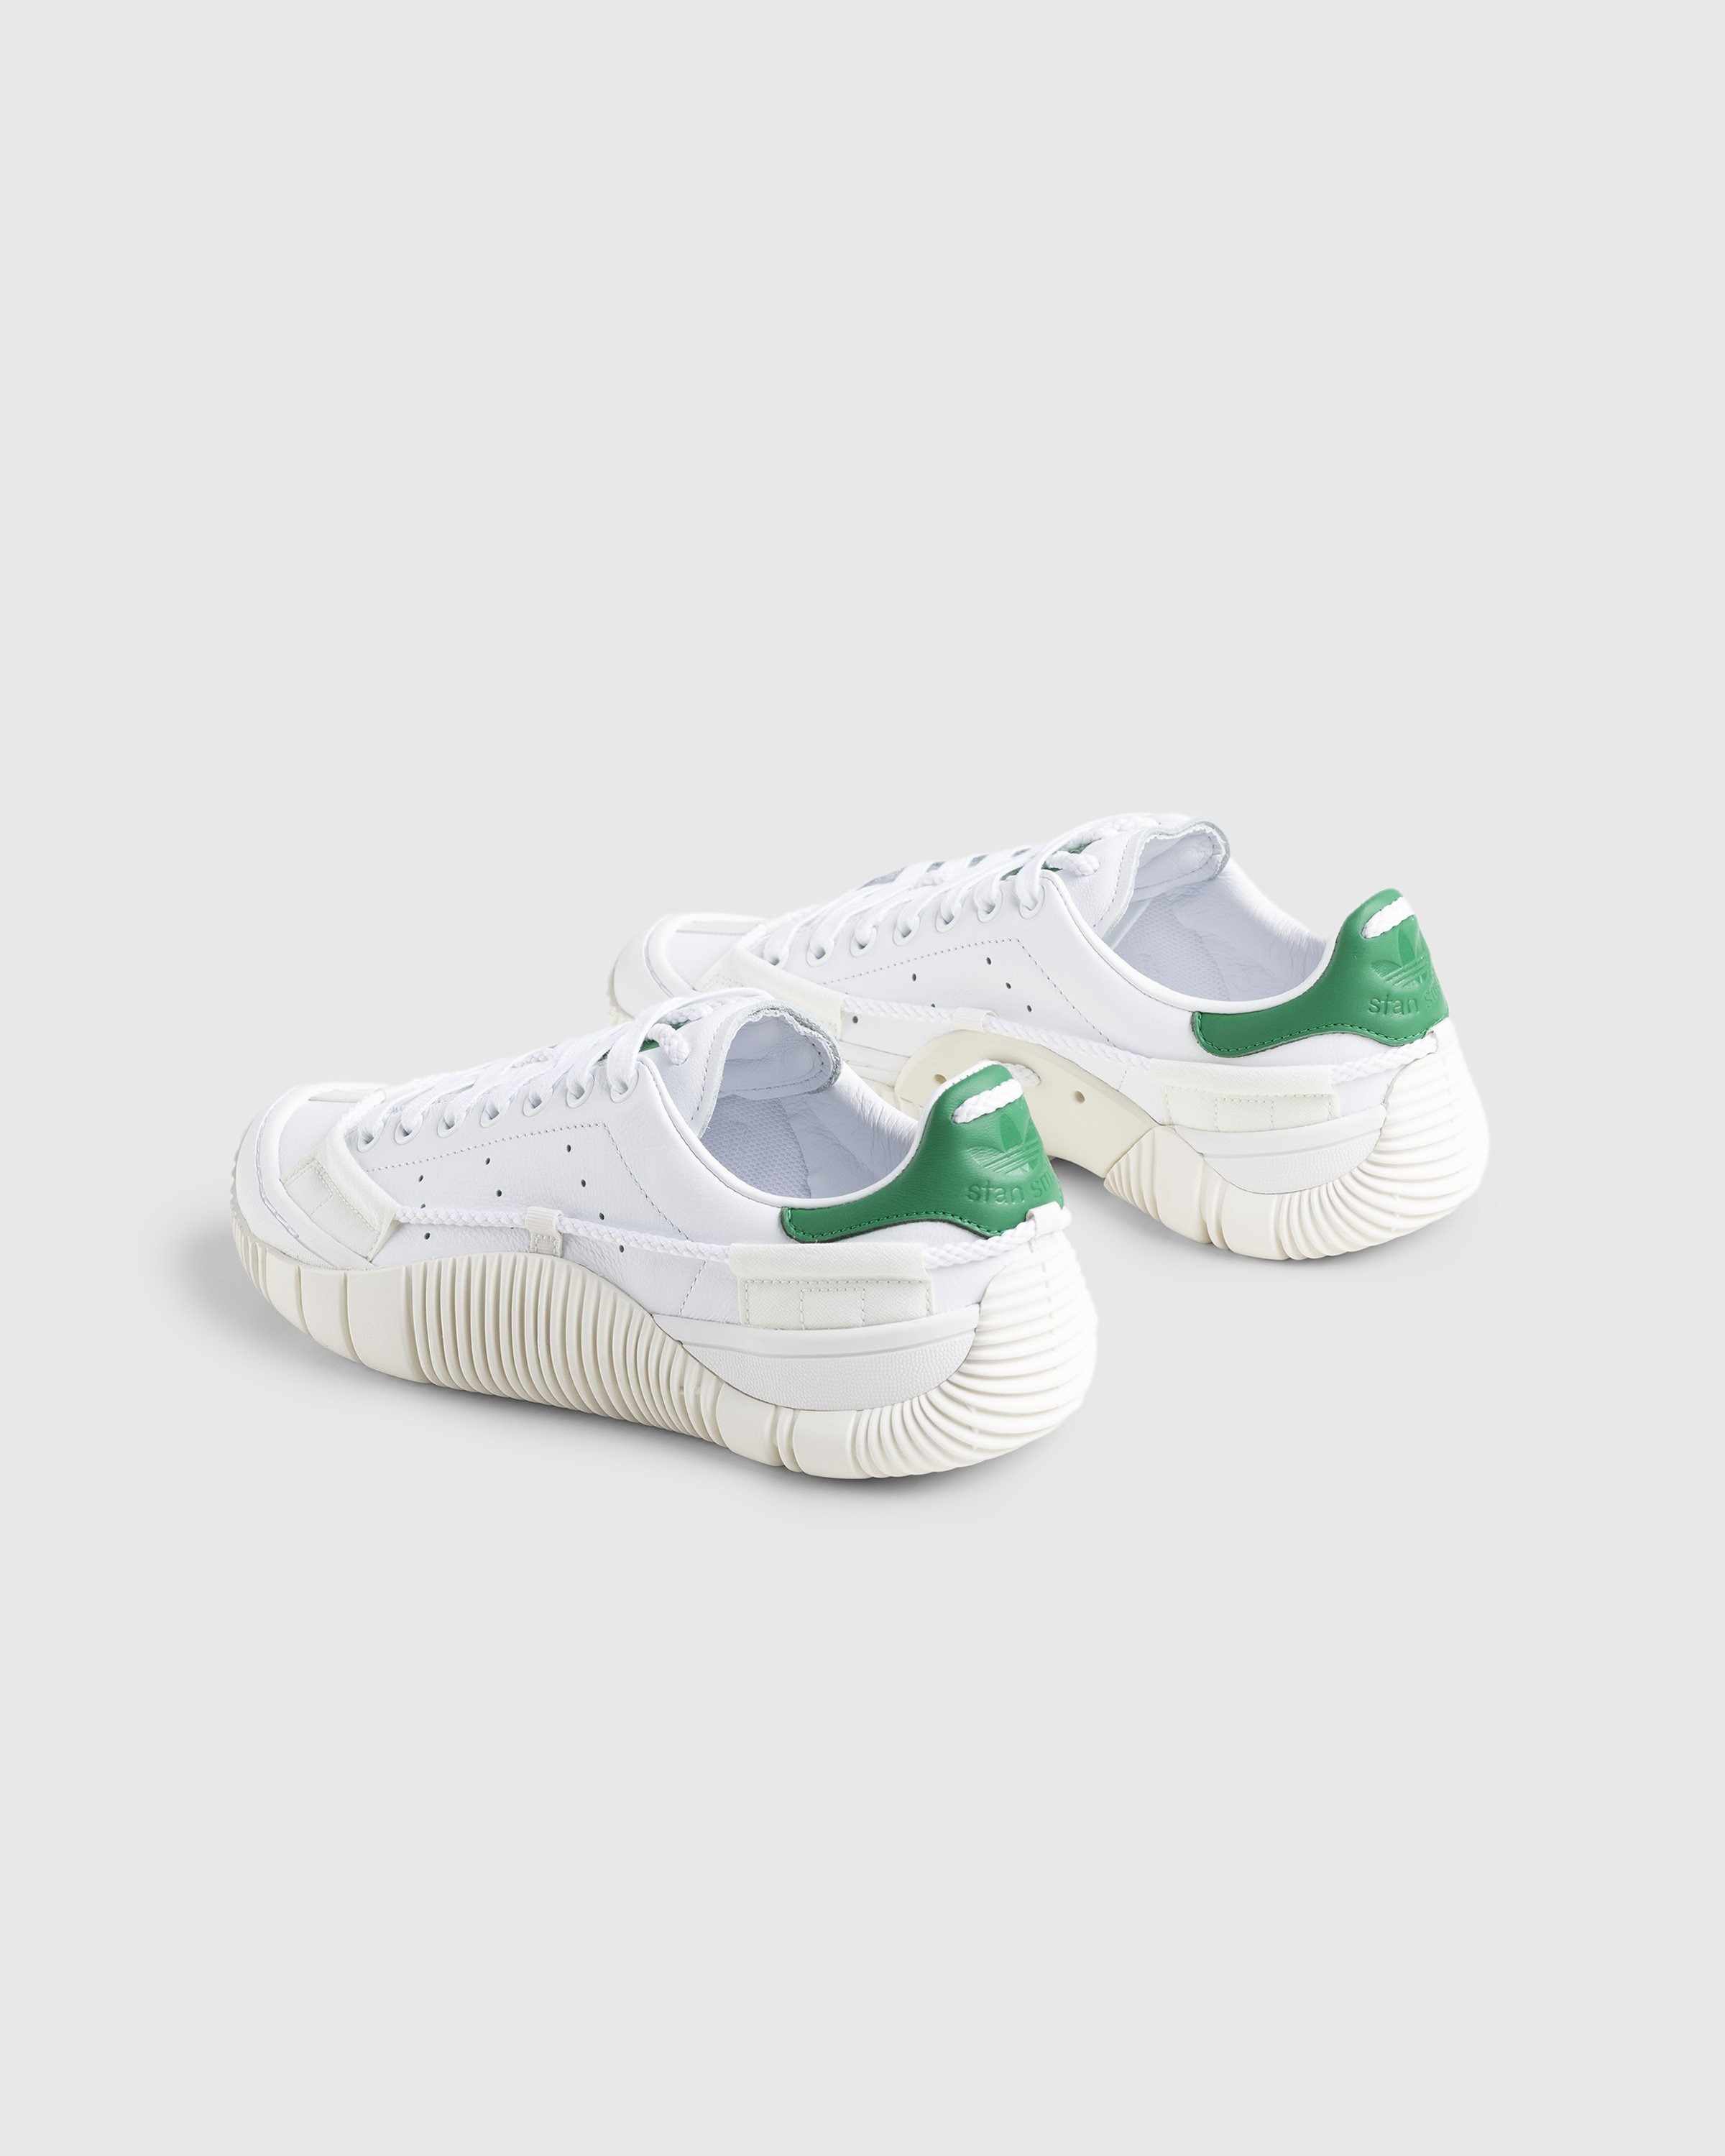 Adidas x Craig Green - Scuba Stan White - Footwear - White - Image 4